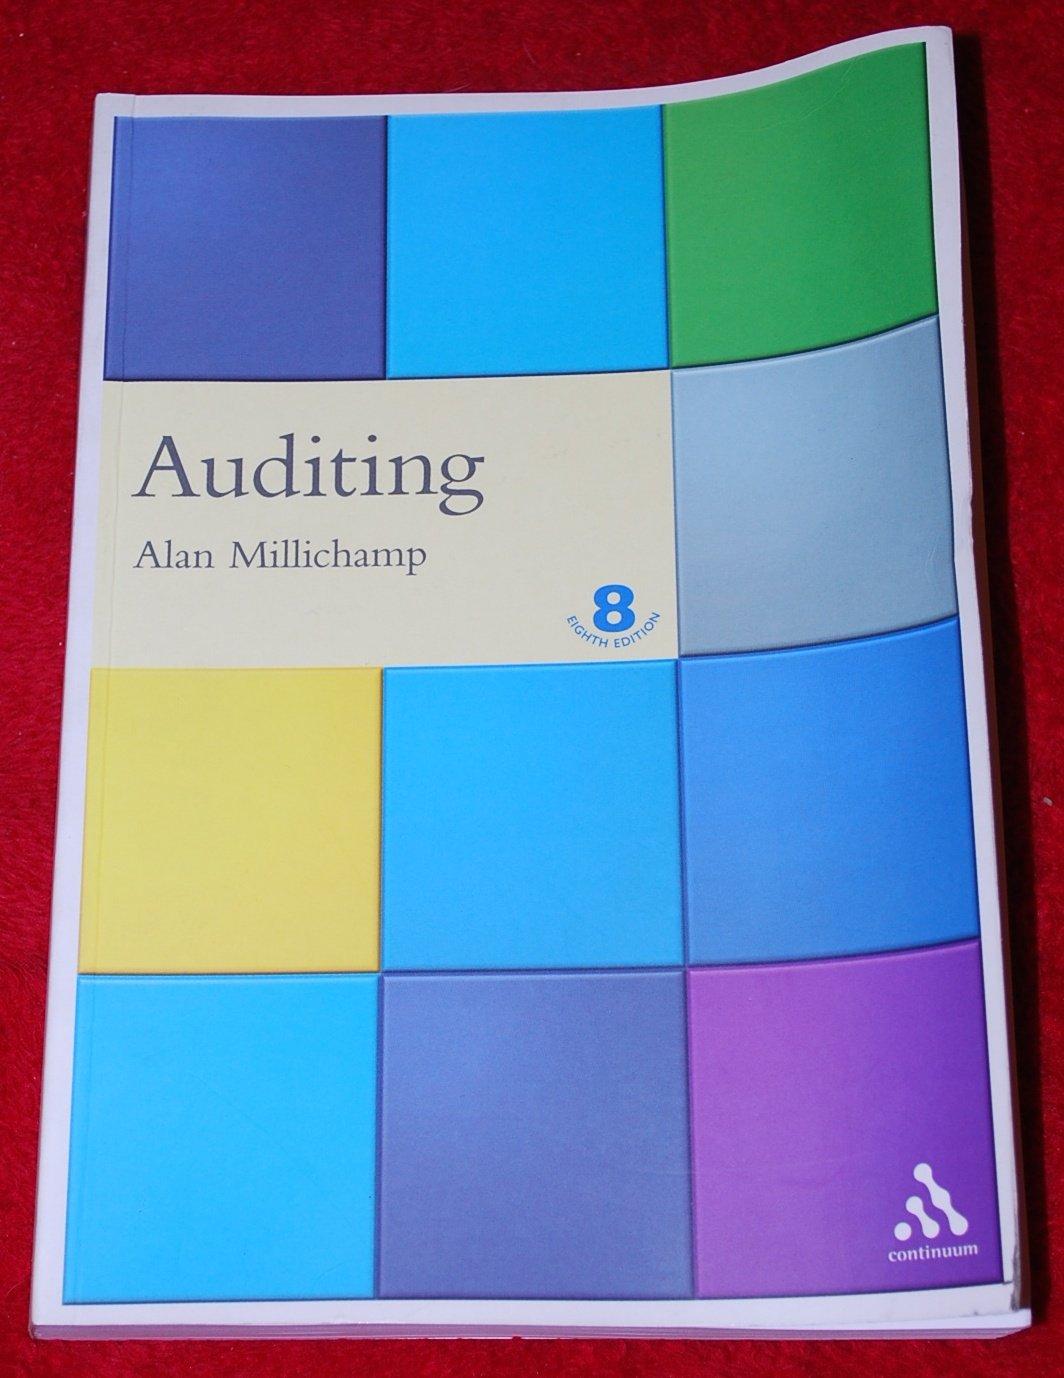 auditing 8th edition alan h. millichamp 082645500x, 9780826455000